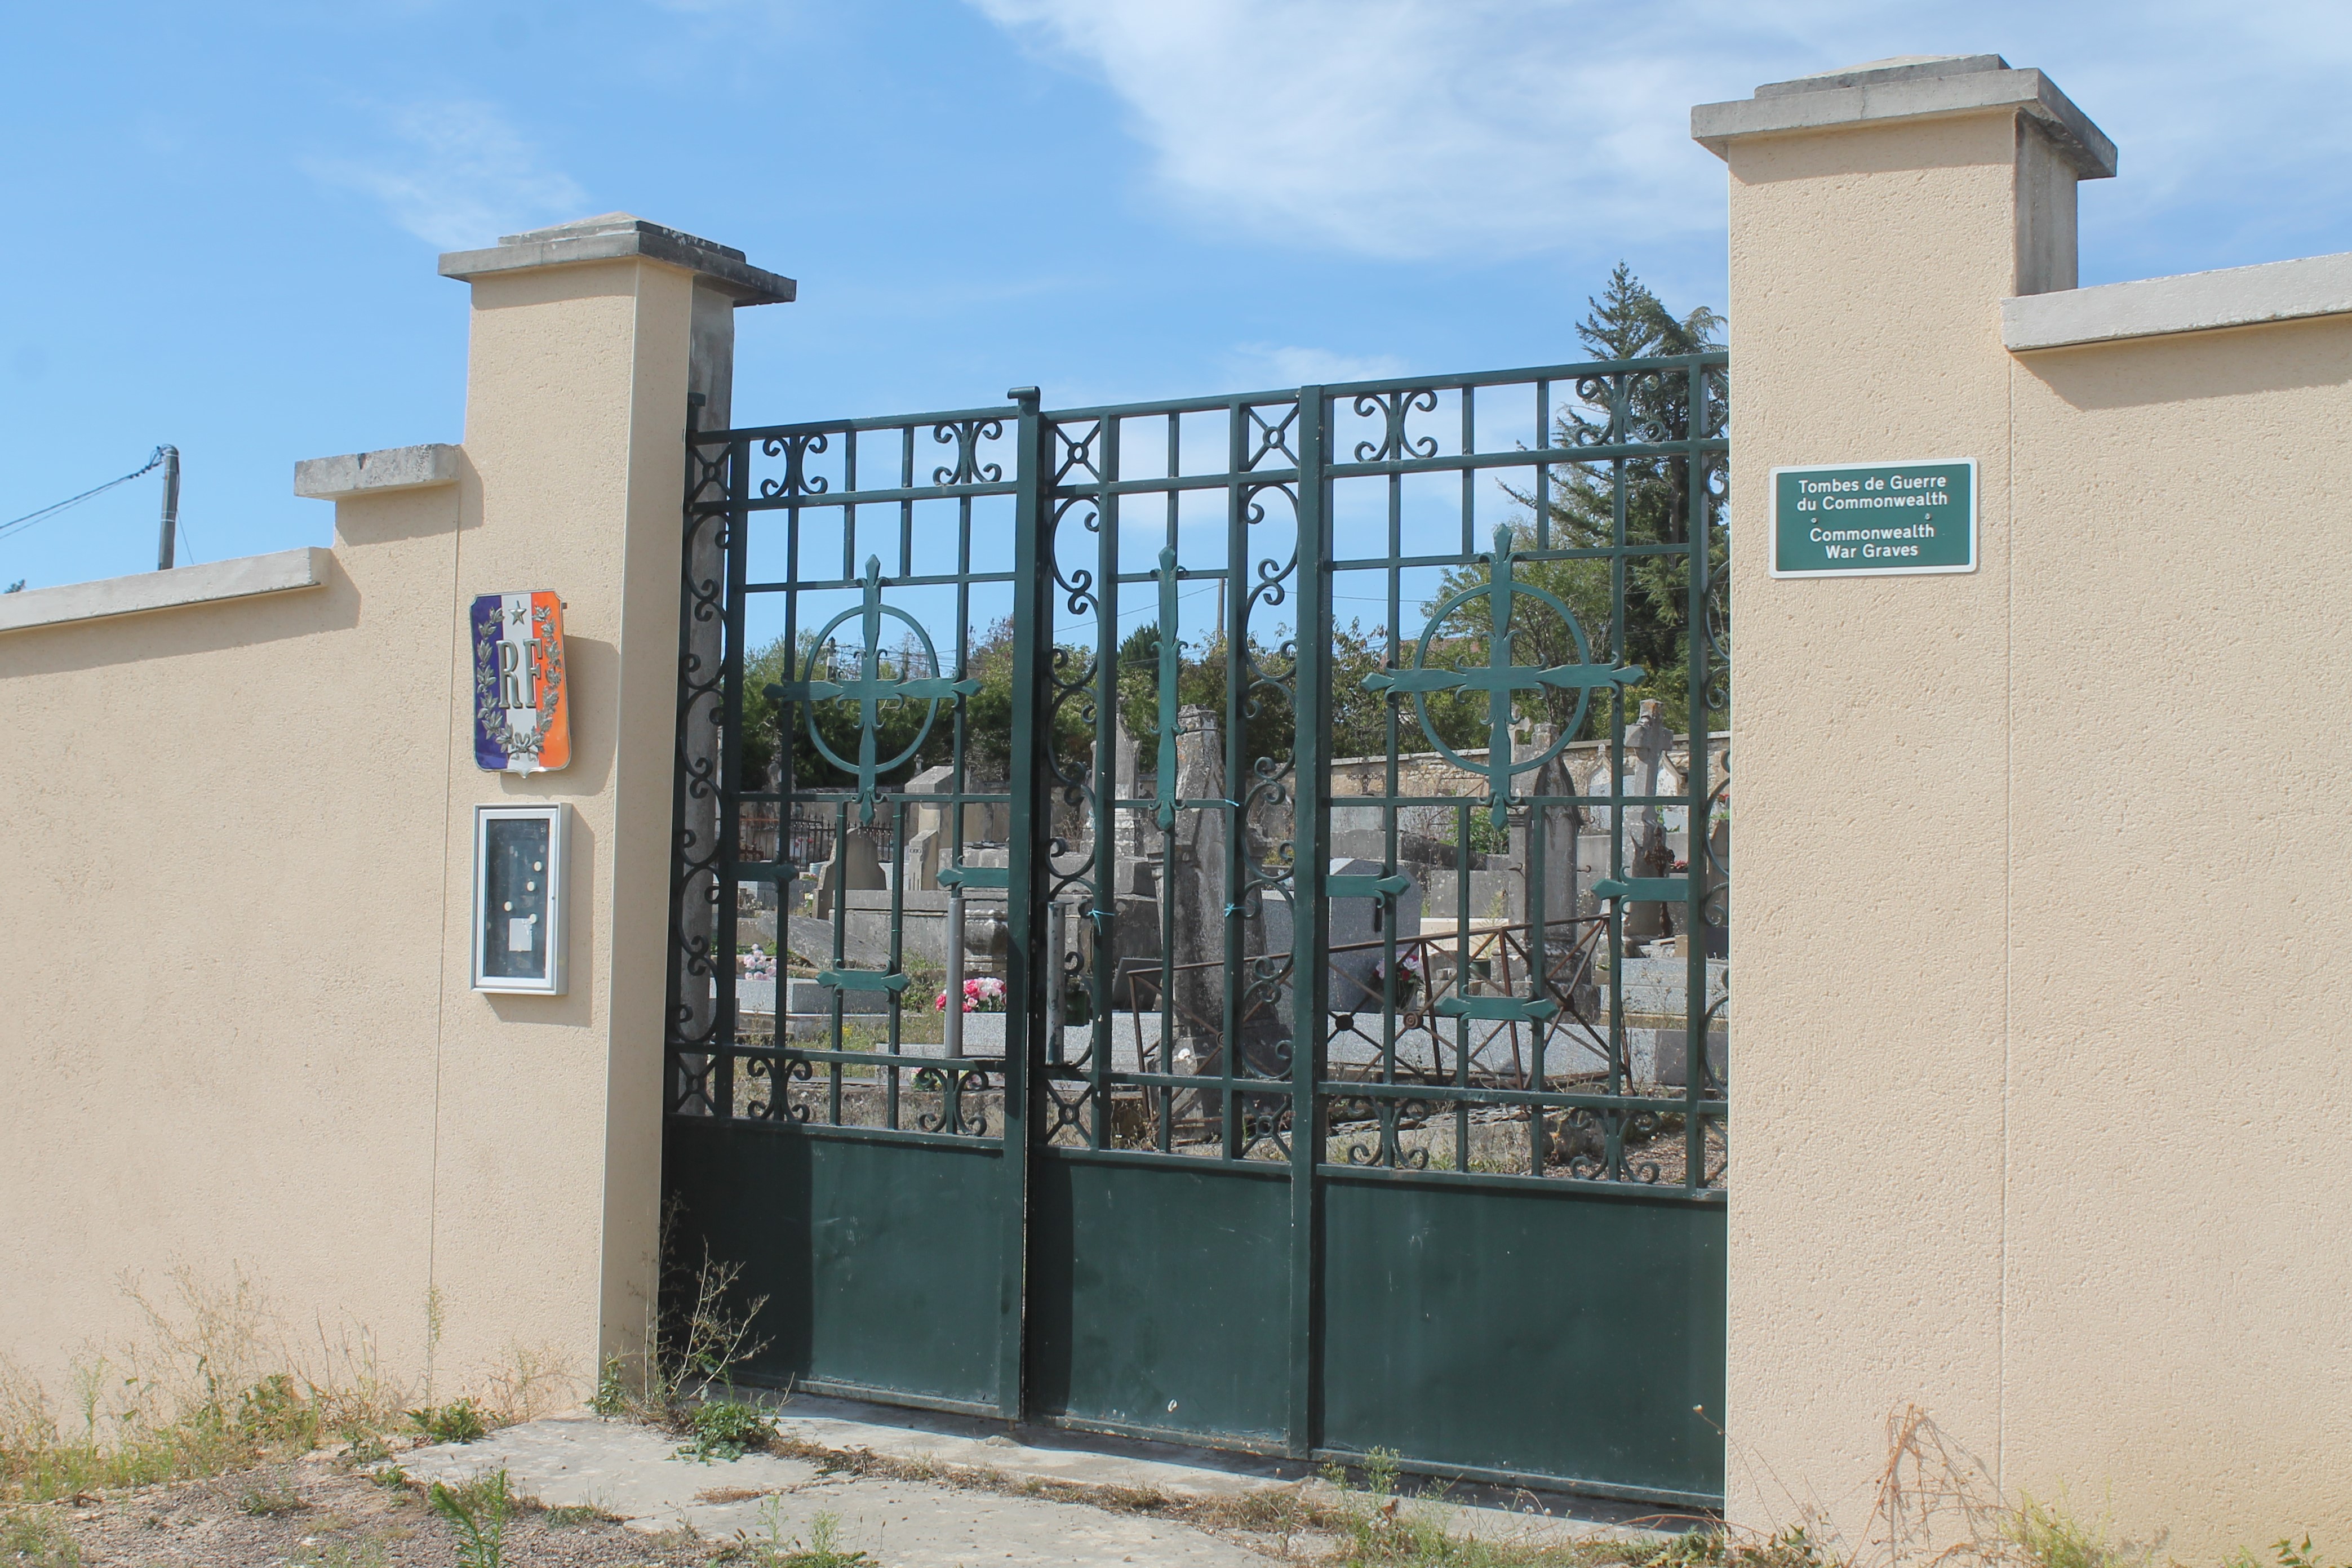 Crain cemetery gates (from Nicholas Vincent)